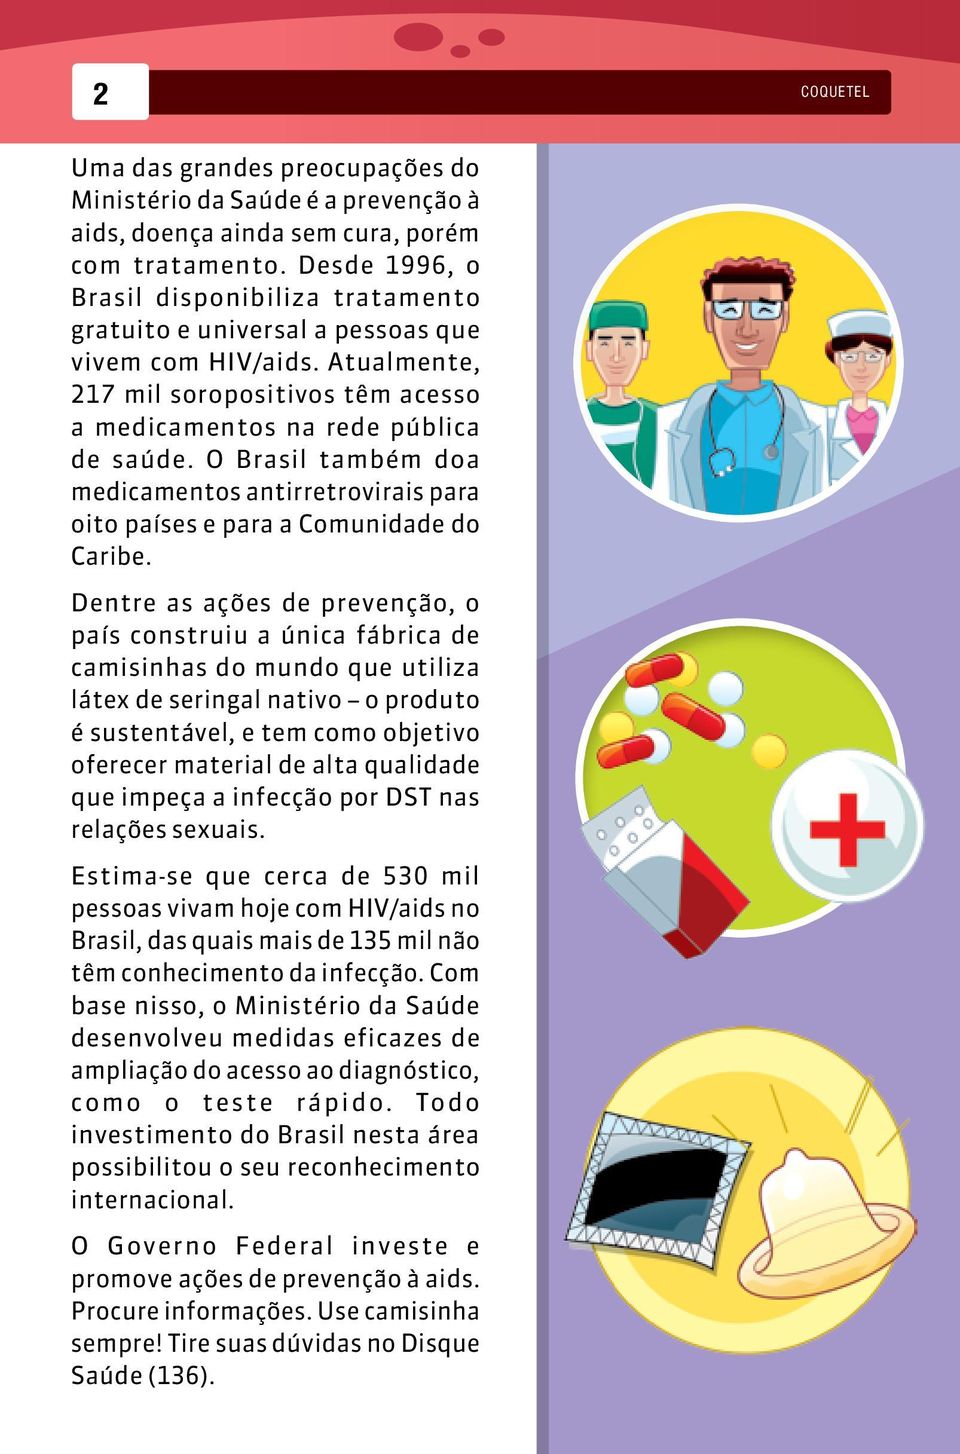 O Brasil também doa medicamentos antirretrovirais para oito países e para a Comunidade do Caribe.